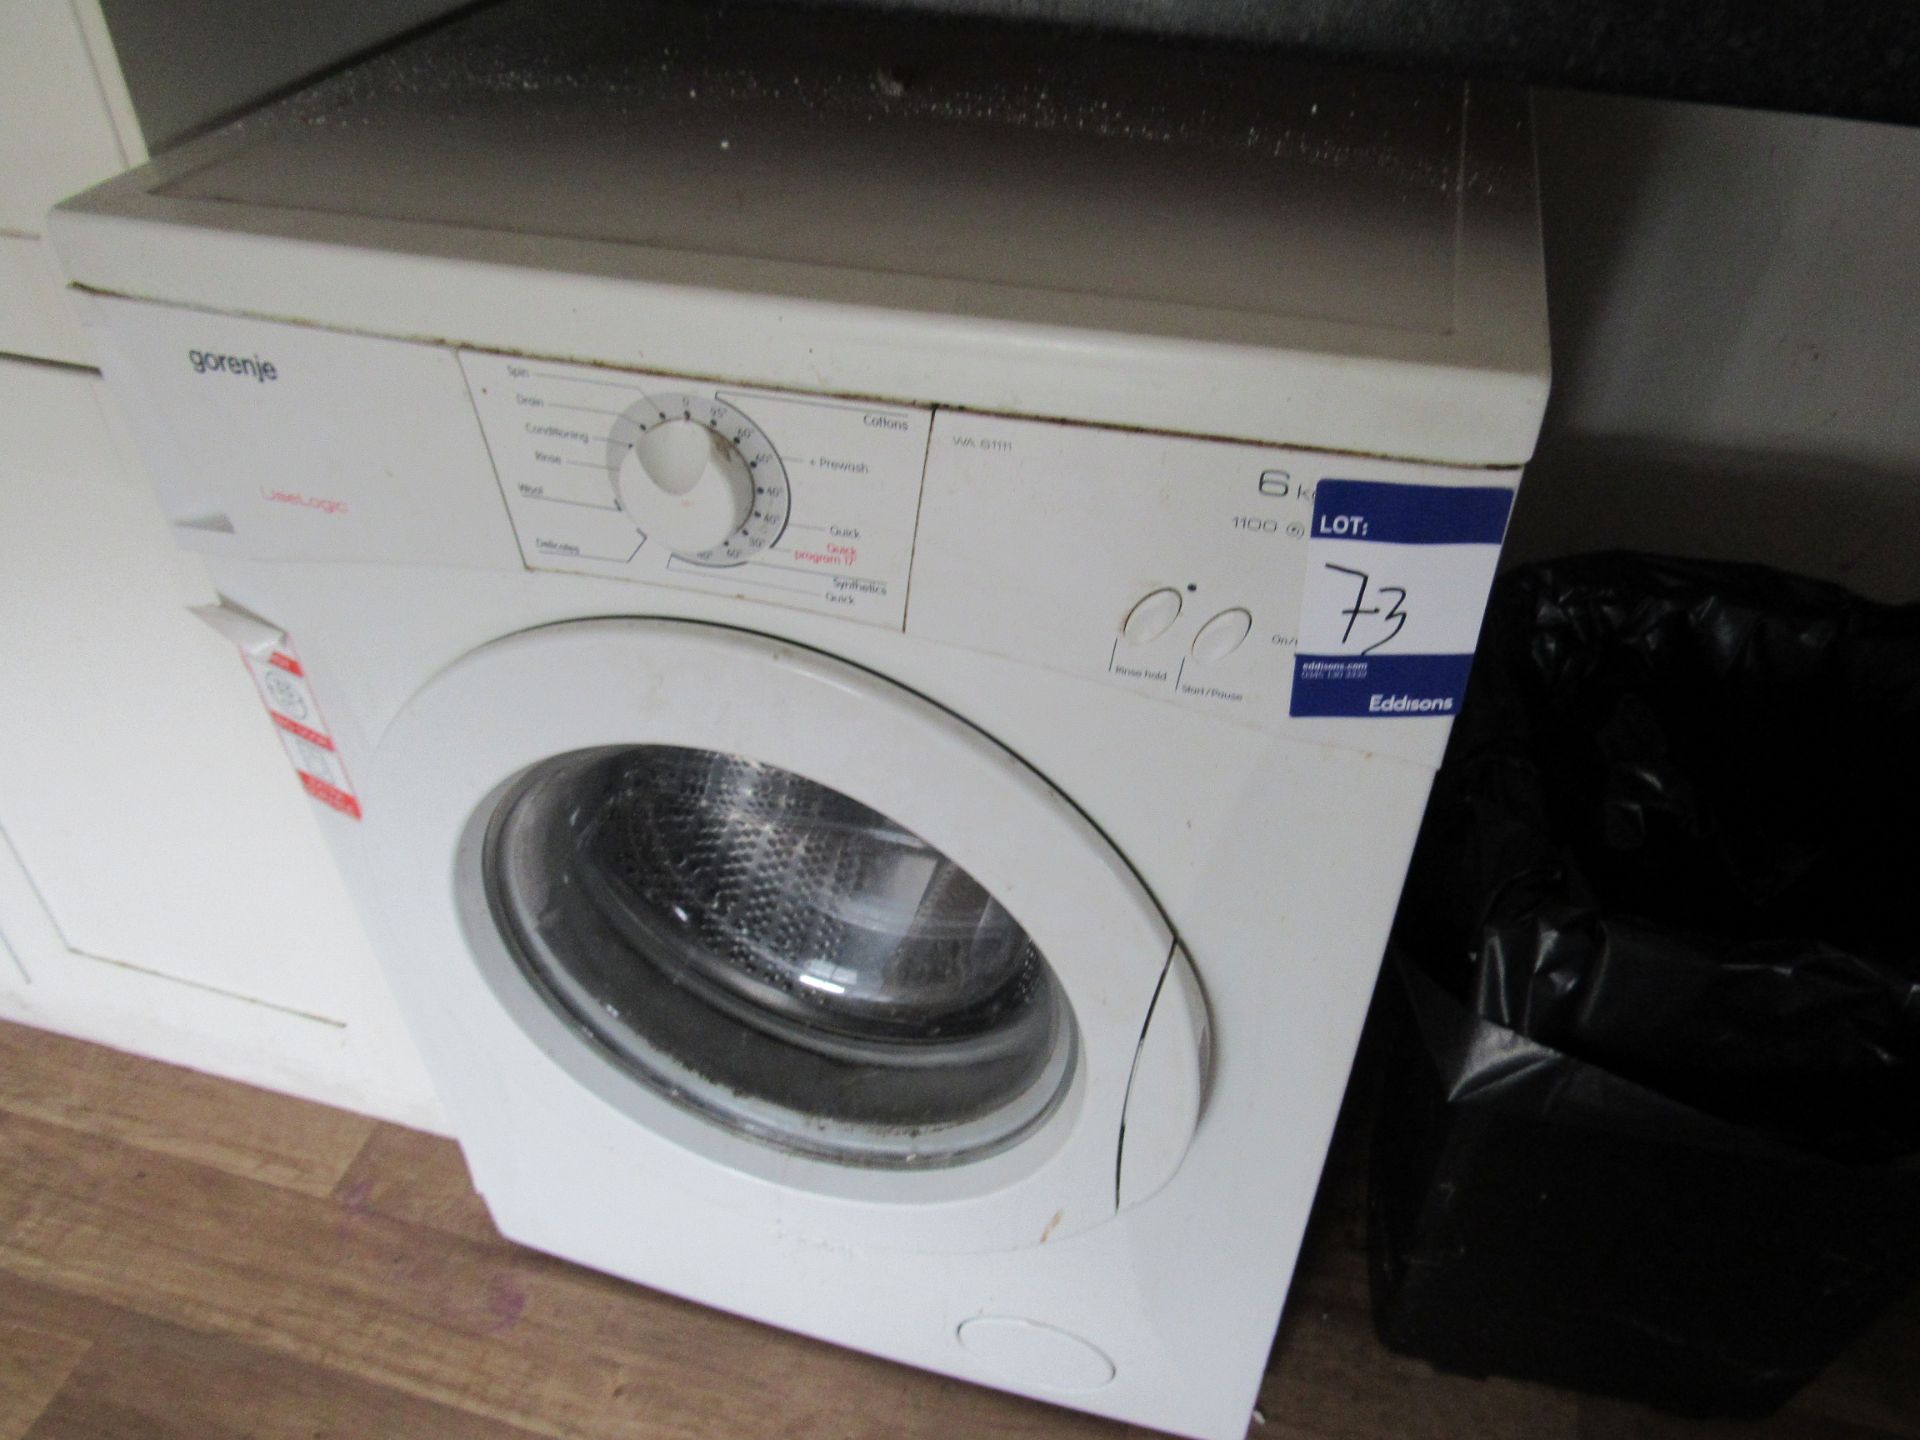 Gorenjie WA6111 6kg washing machine